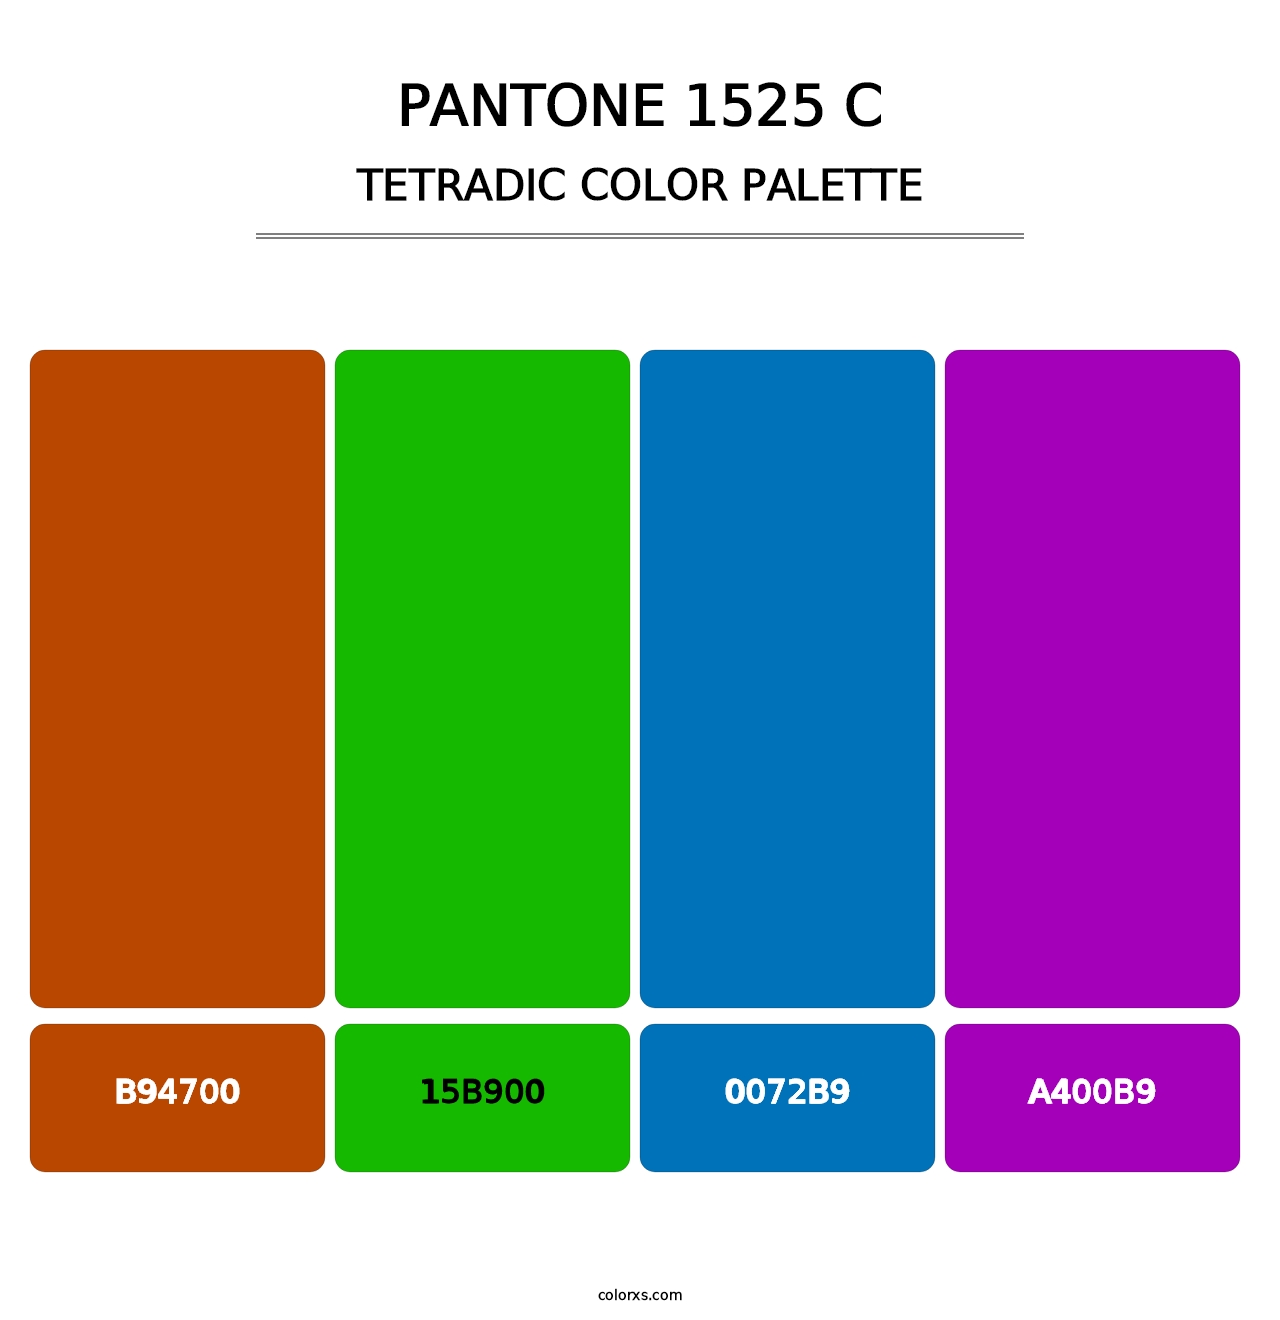 PANTONE 1525 C - Tetradic Color Palette